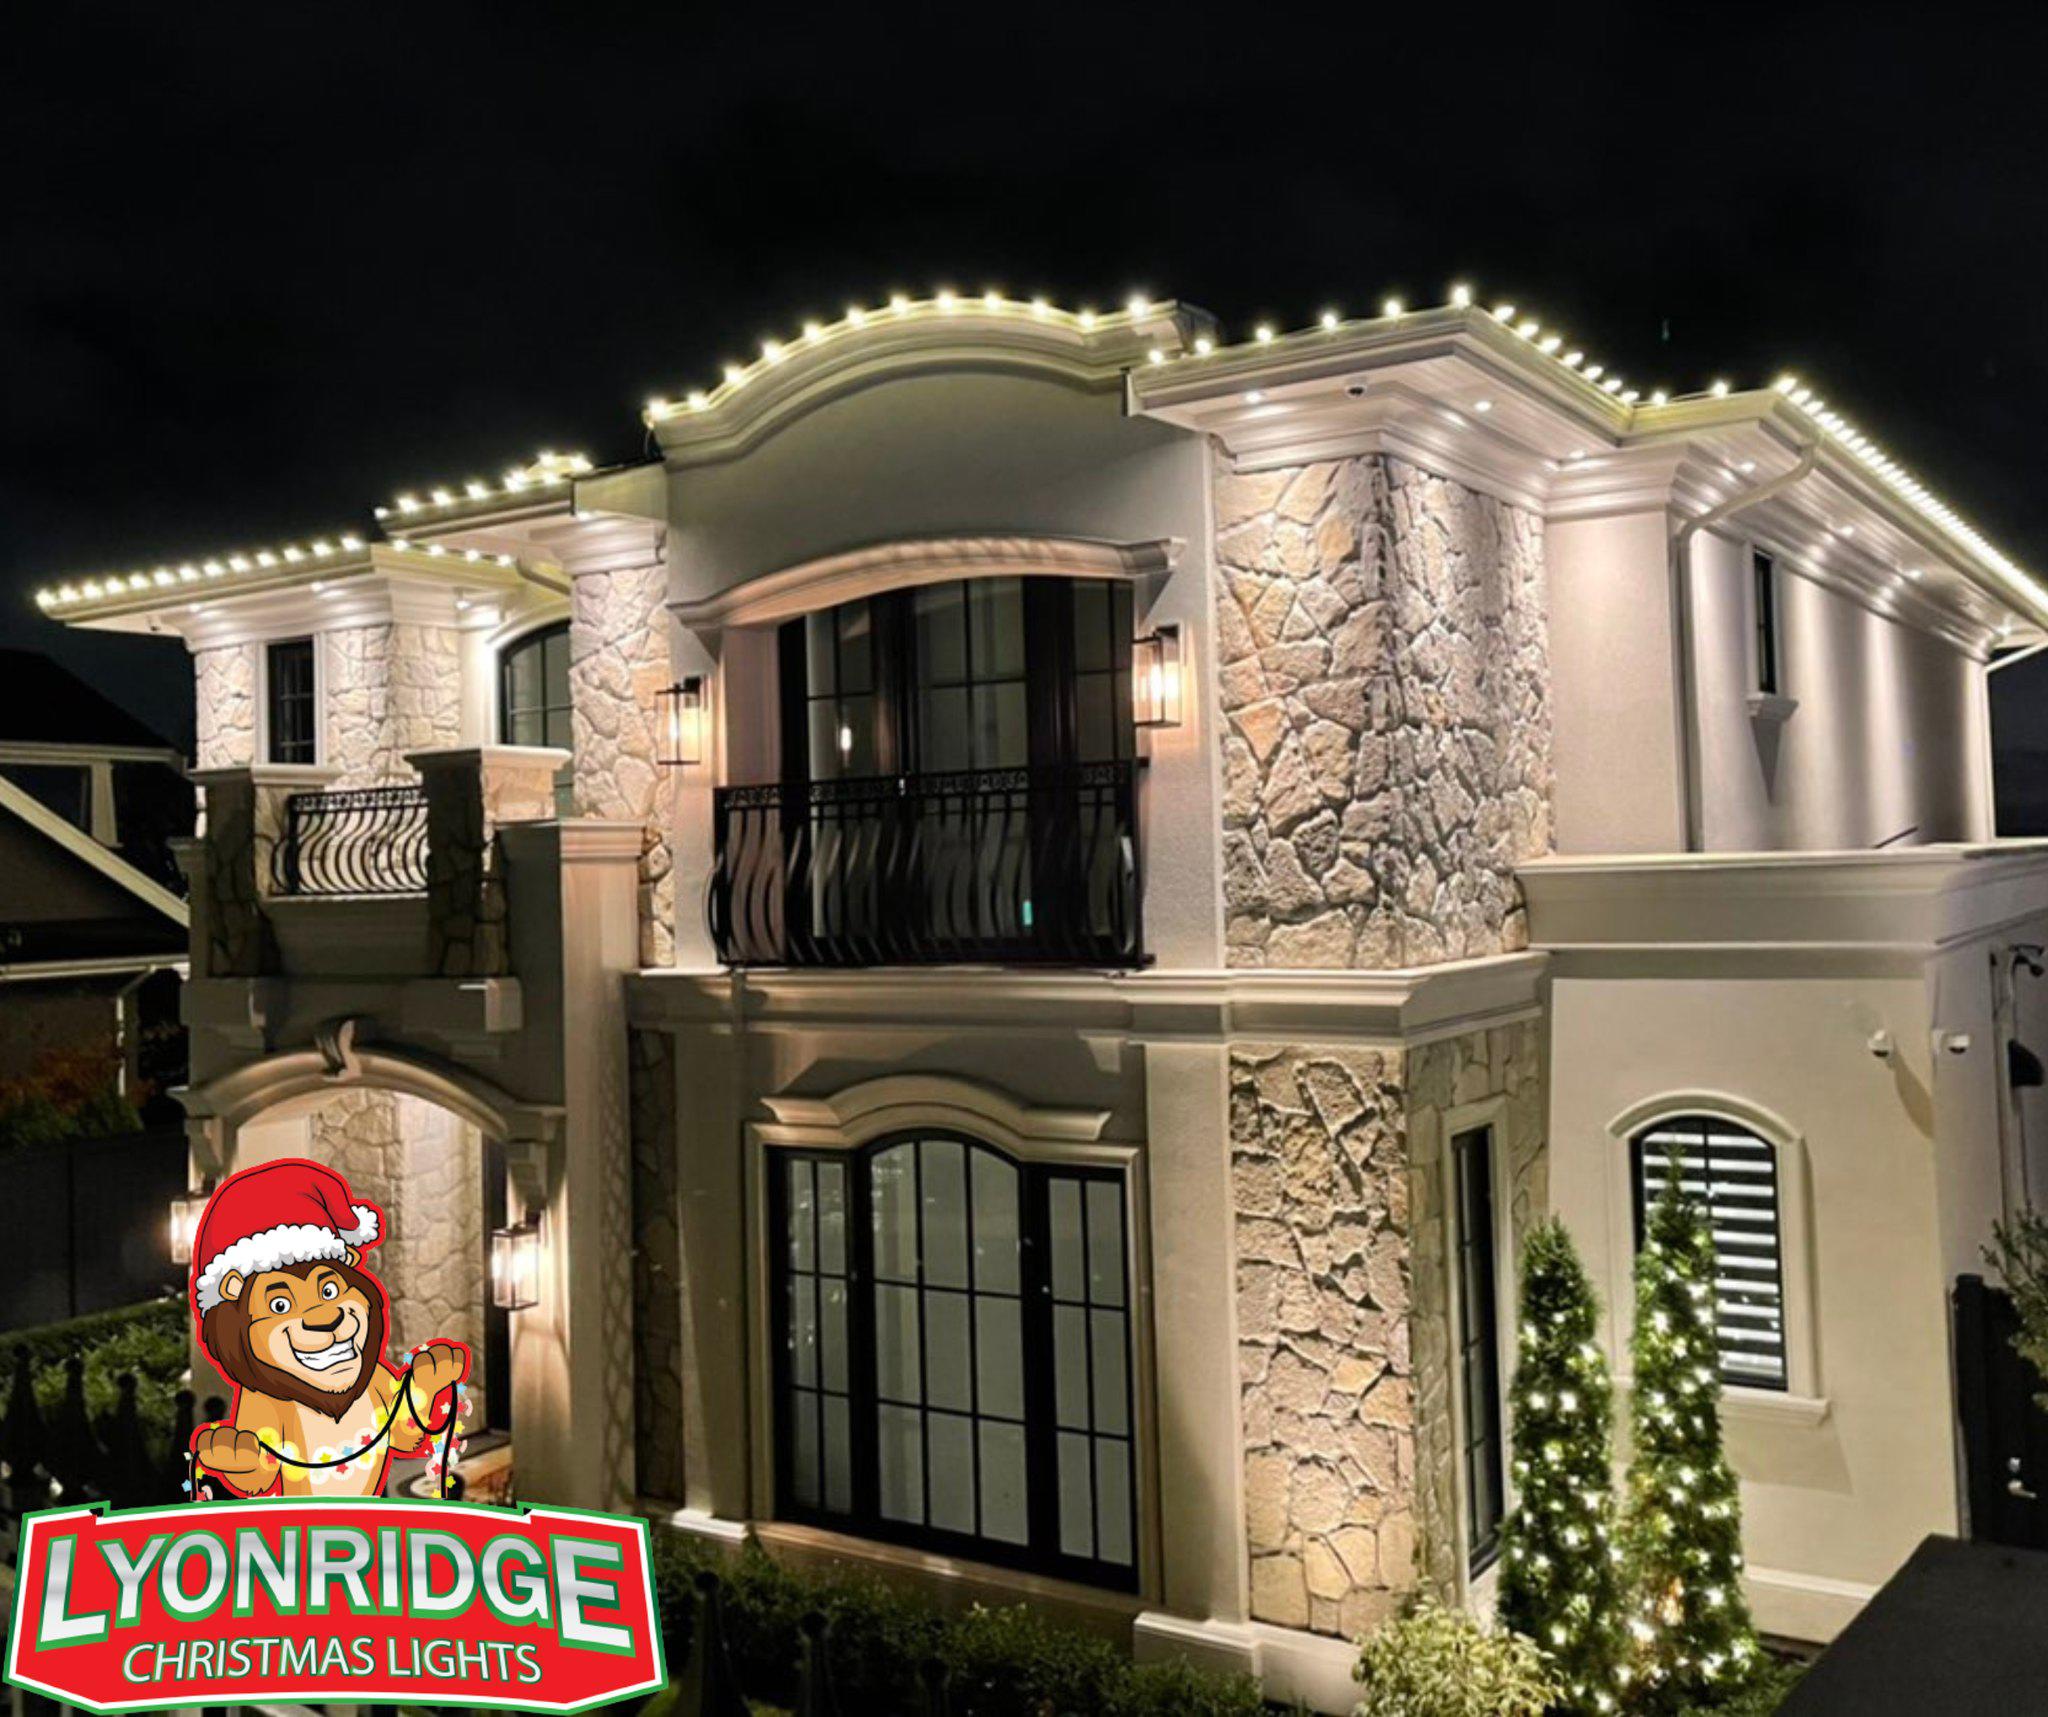 Images Lyonridge Christmas Lights